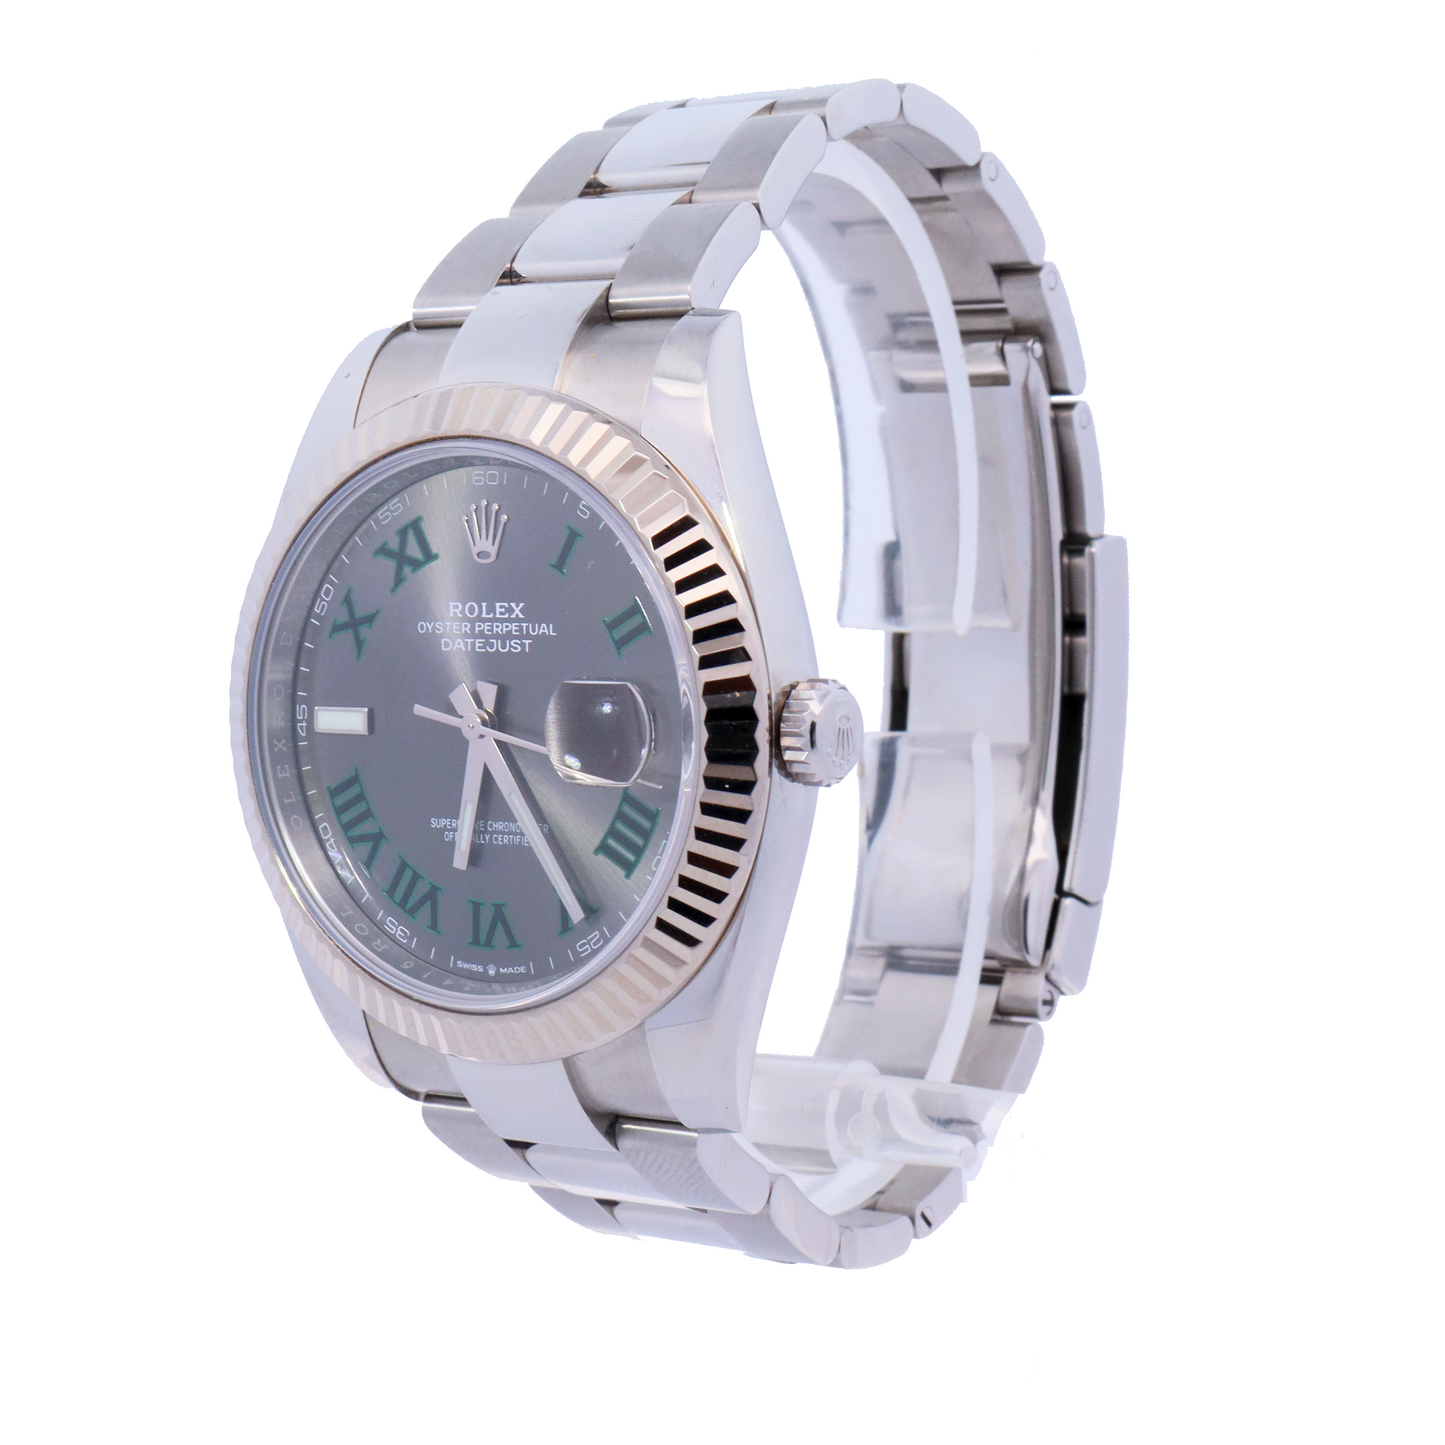 Rolex Datejust Stainless Steel 41mm Wimbeldon Roman Dial Watch | Ref# 126334 - Happy Jewelers Fine Jewelry Lifetime Warranty